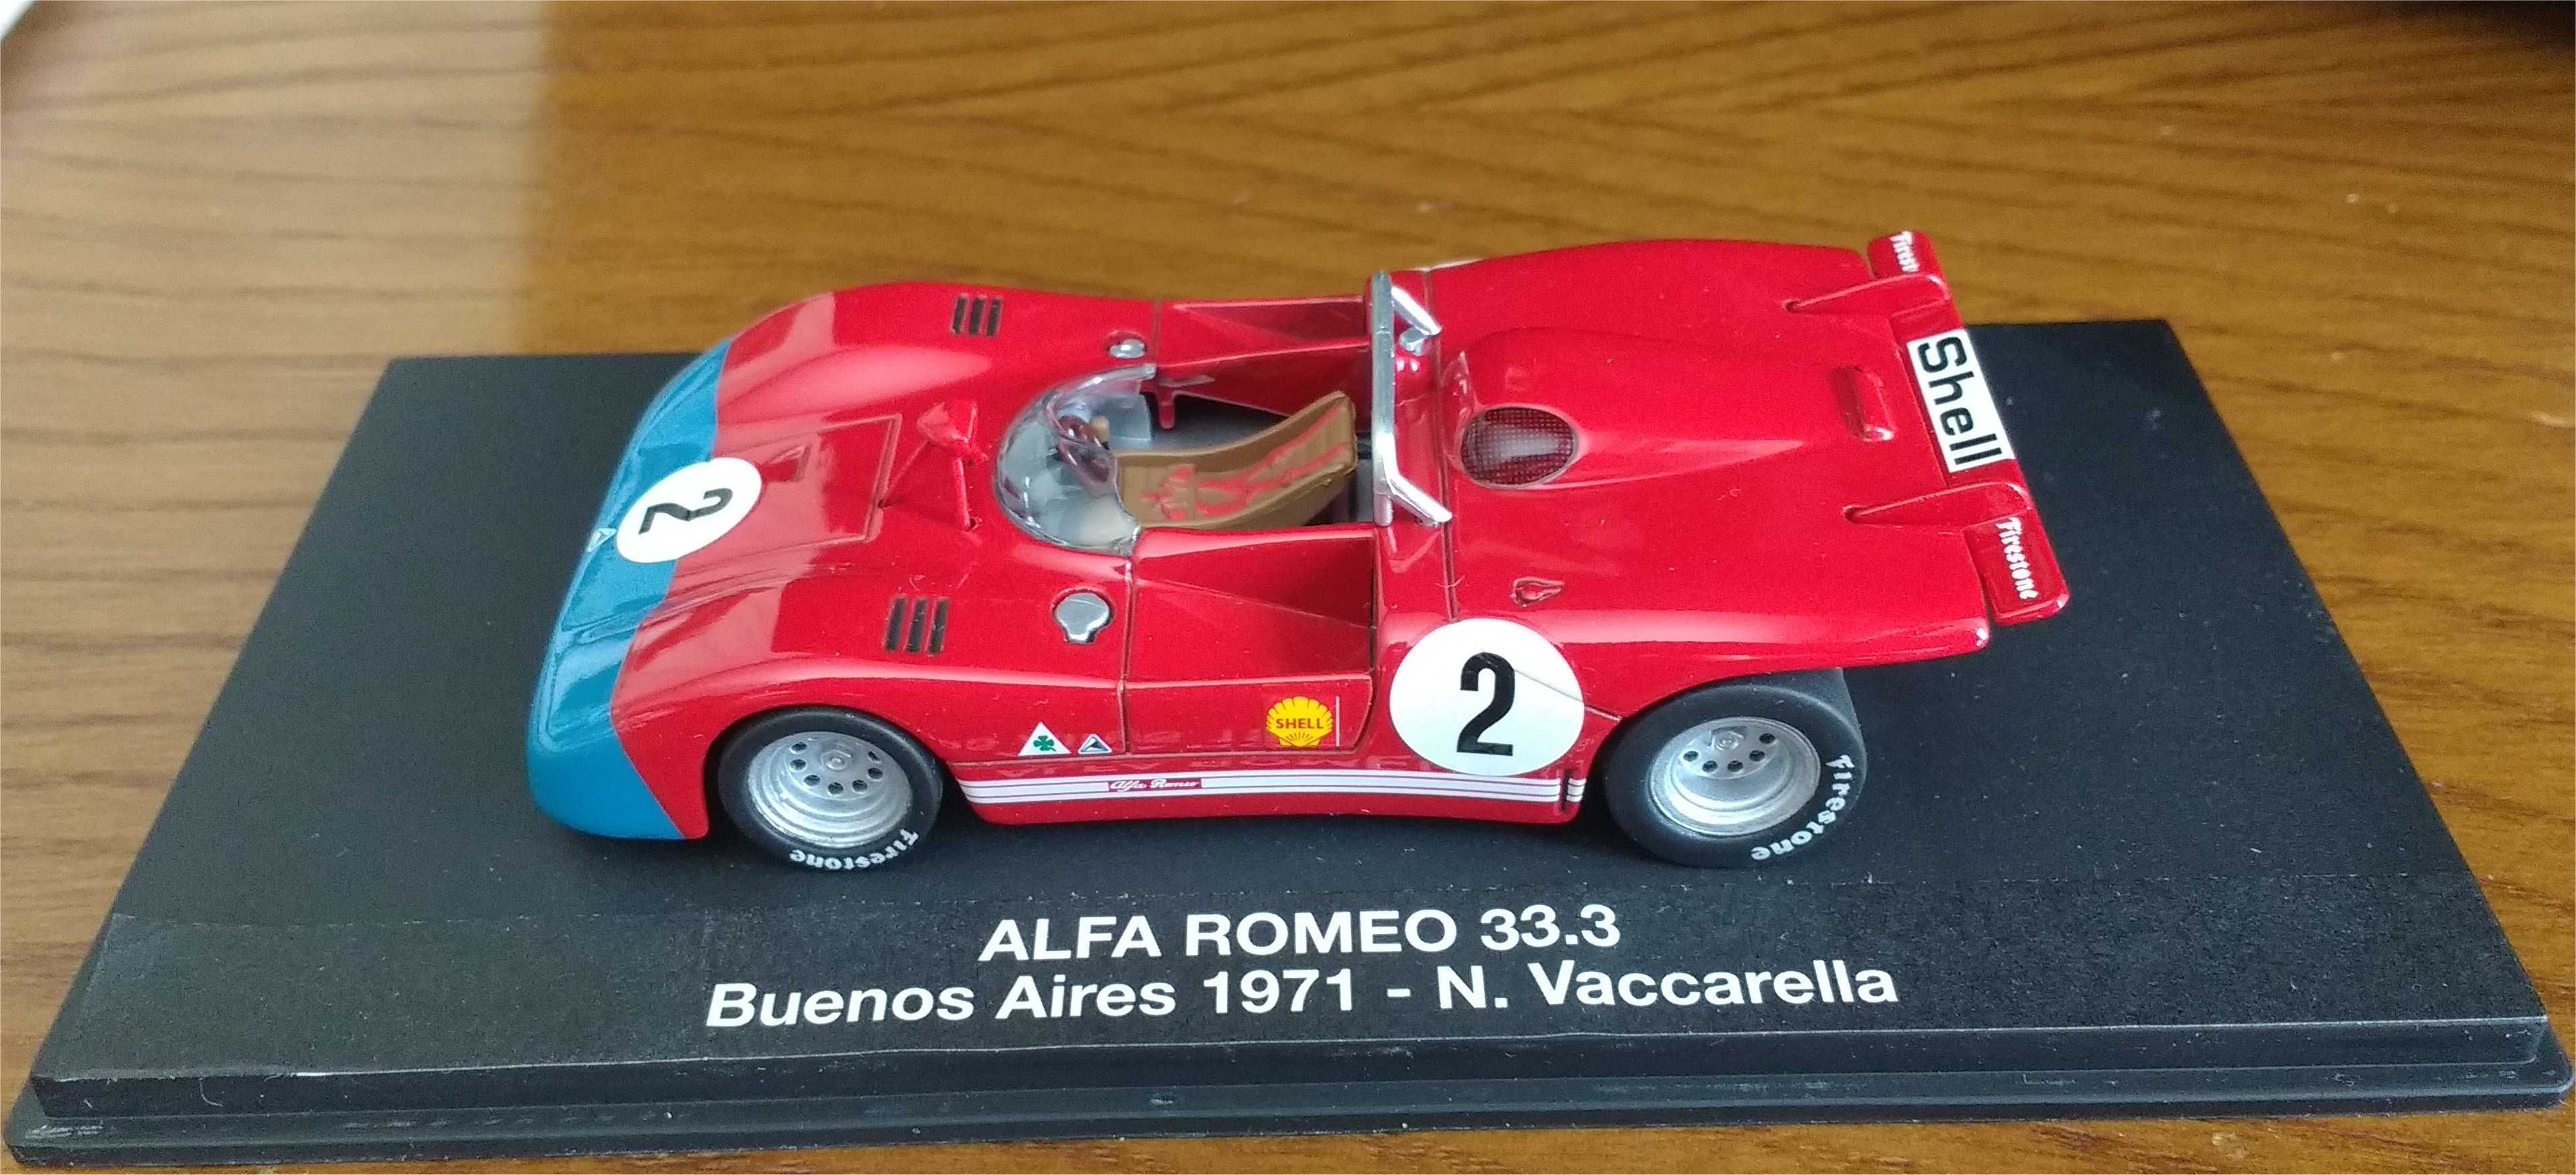 M4 - Alfa Romeo 33.3 - Buenos Aires 1971 - N. Vaccarella